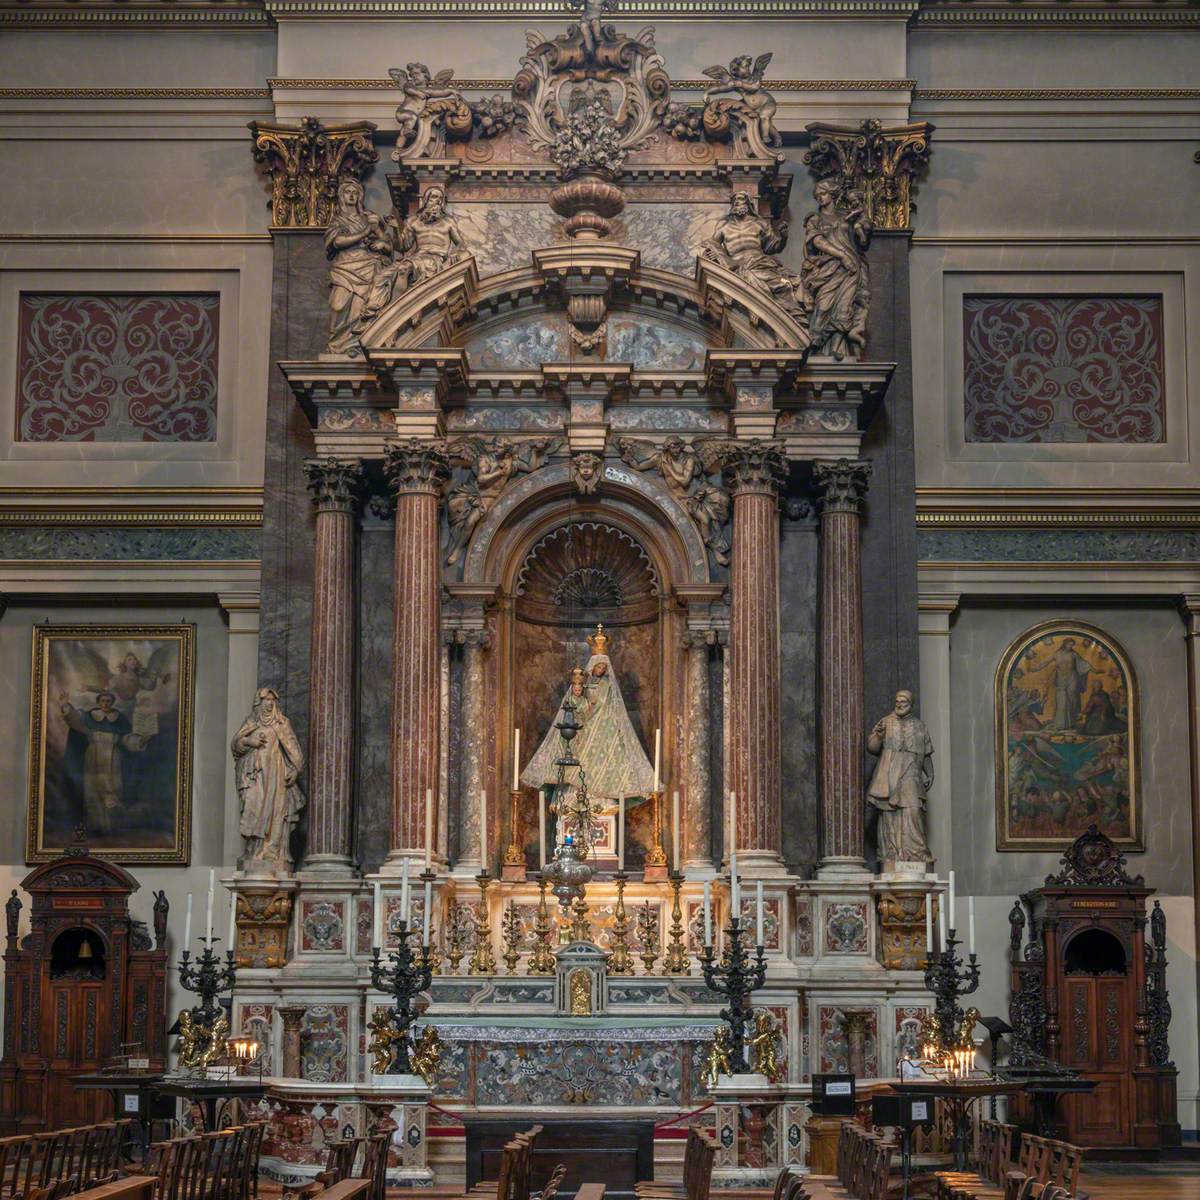 The Lady Altar